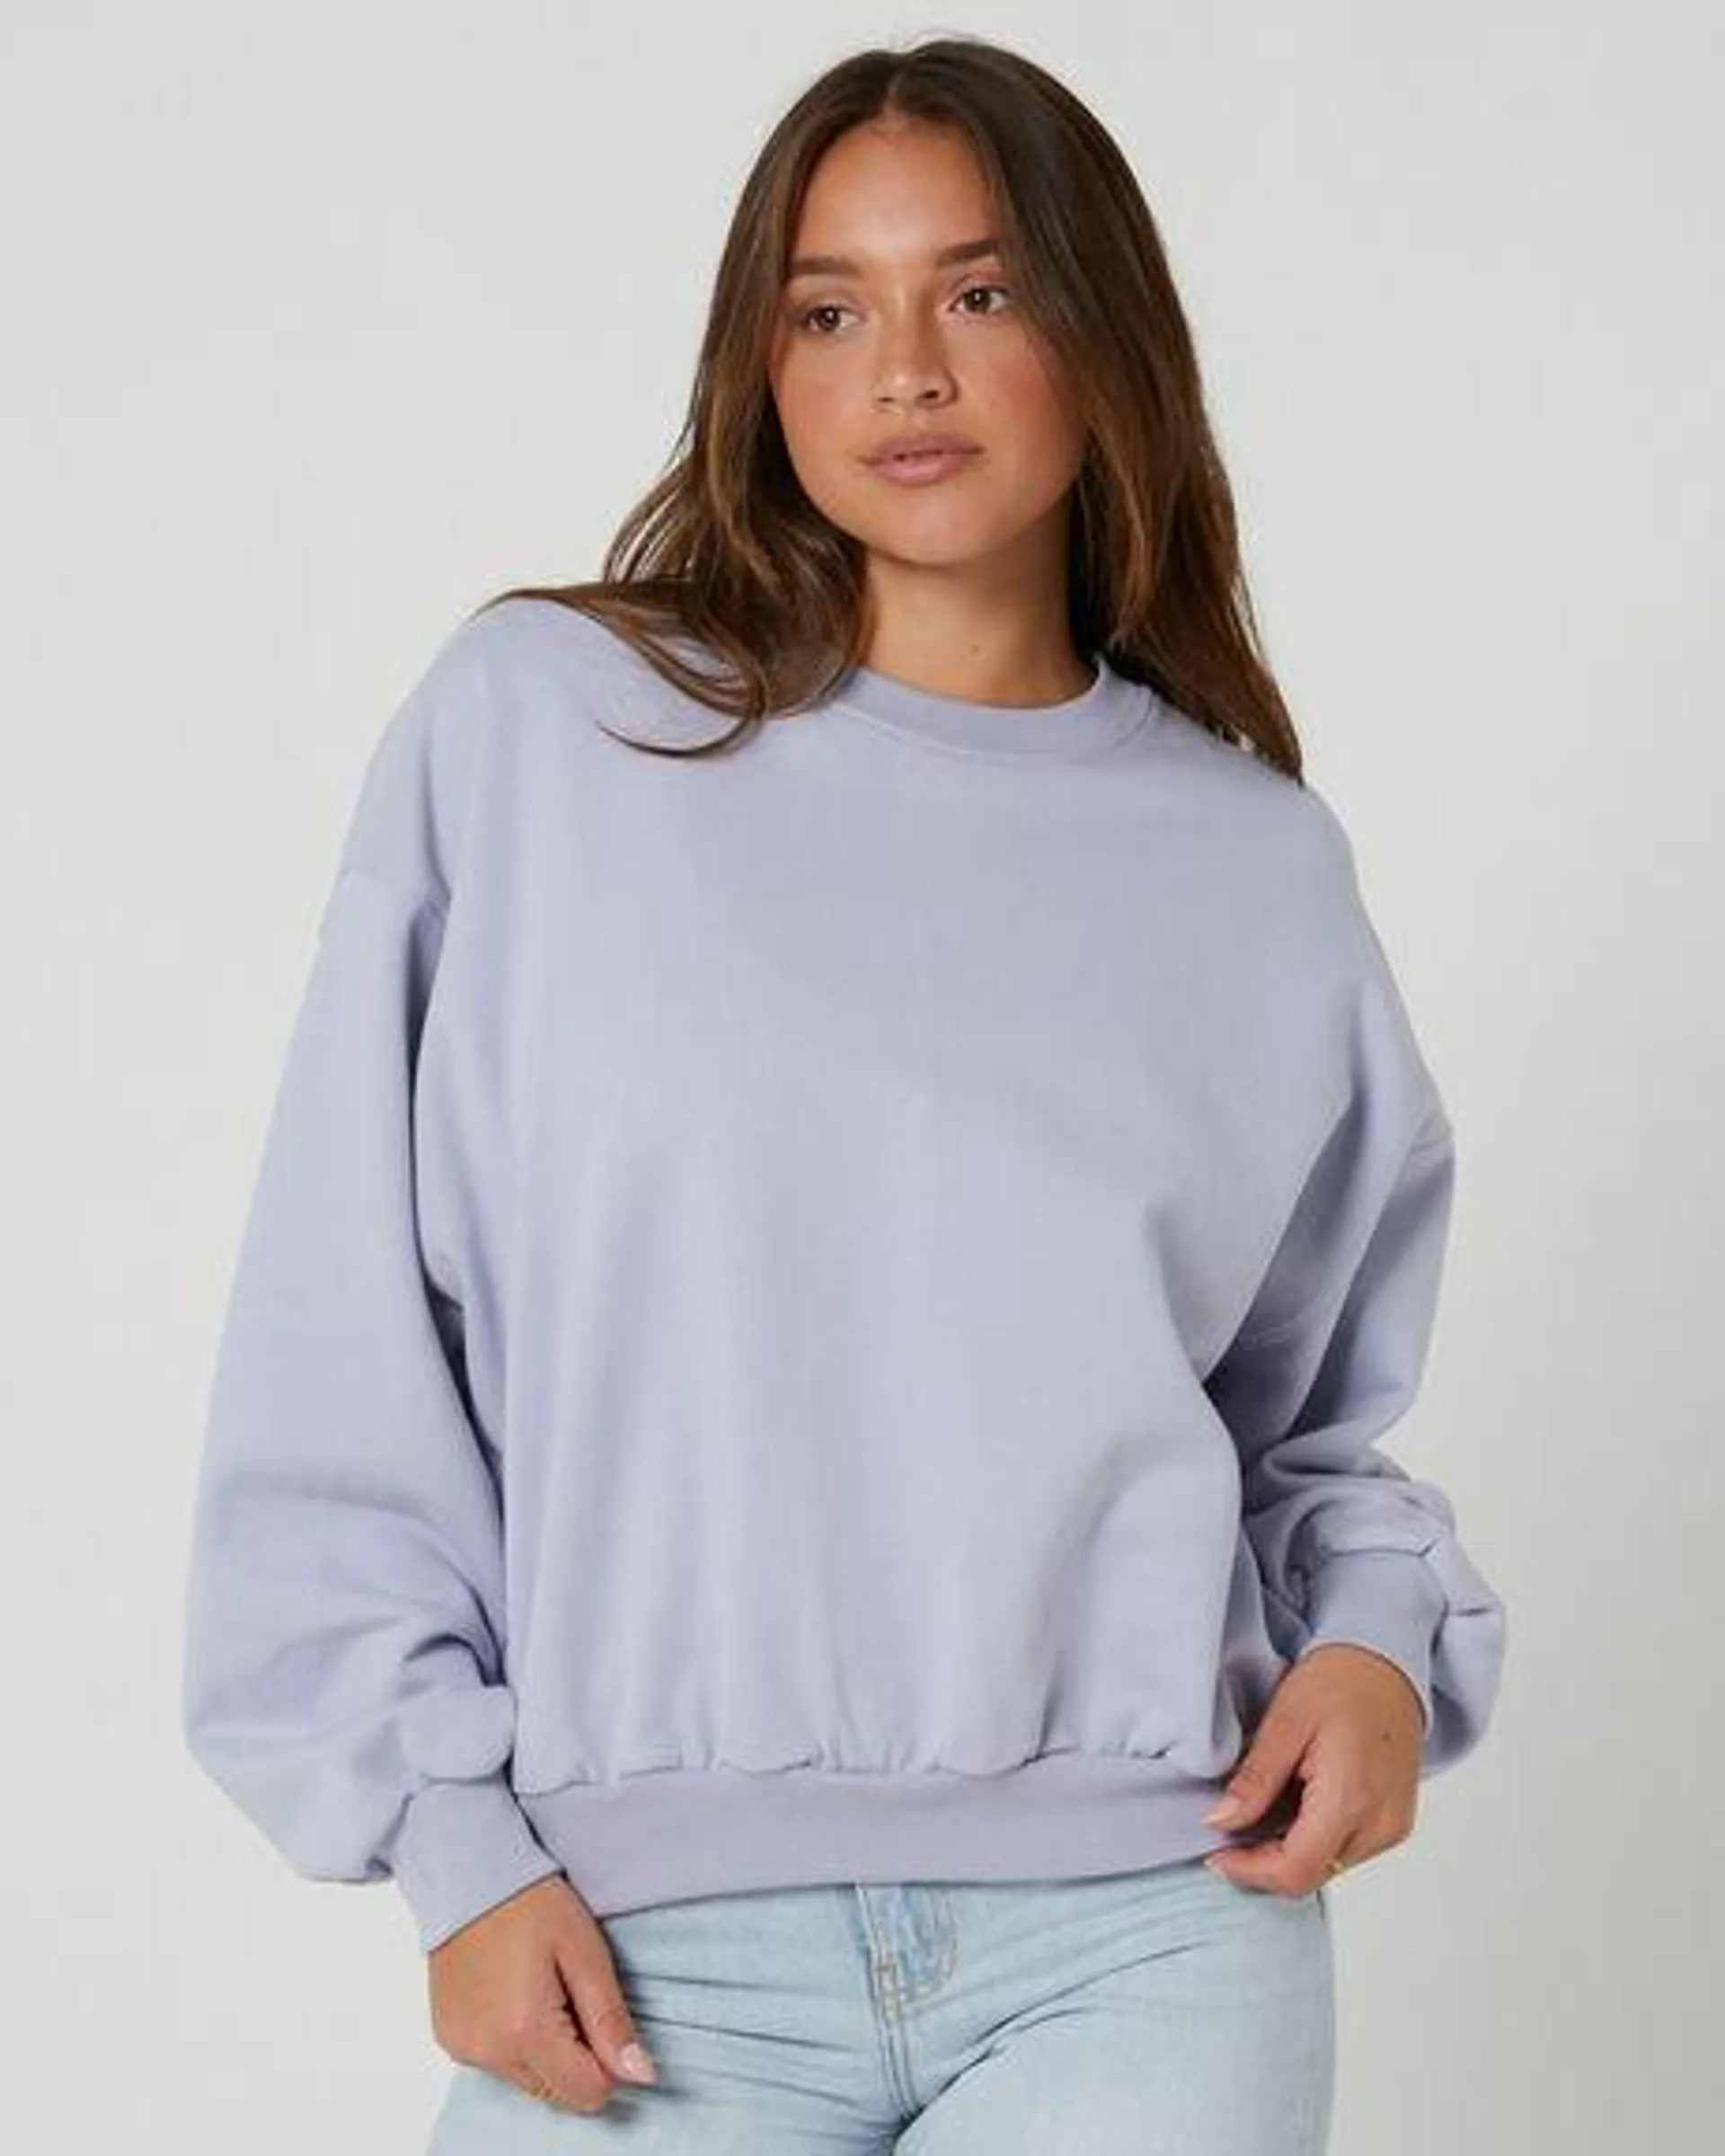 Lizl Sweater